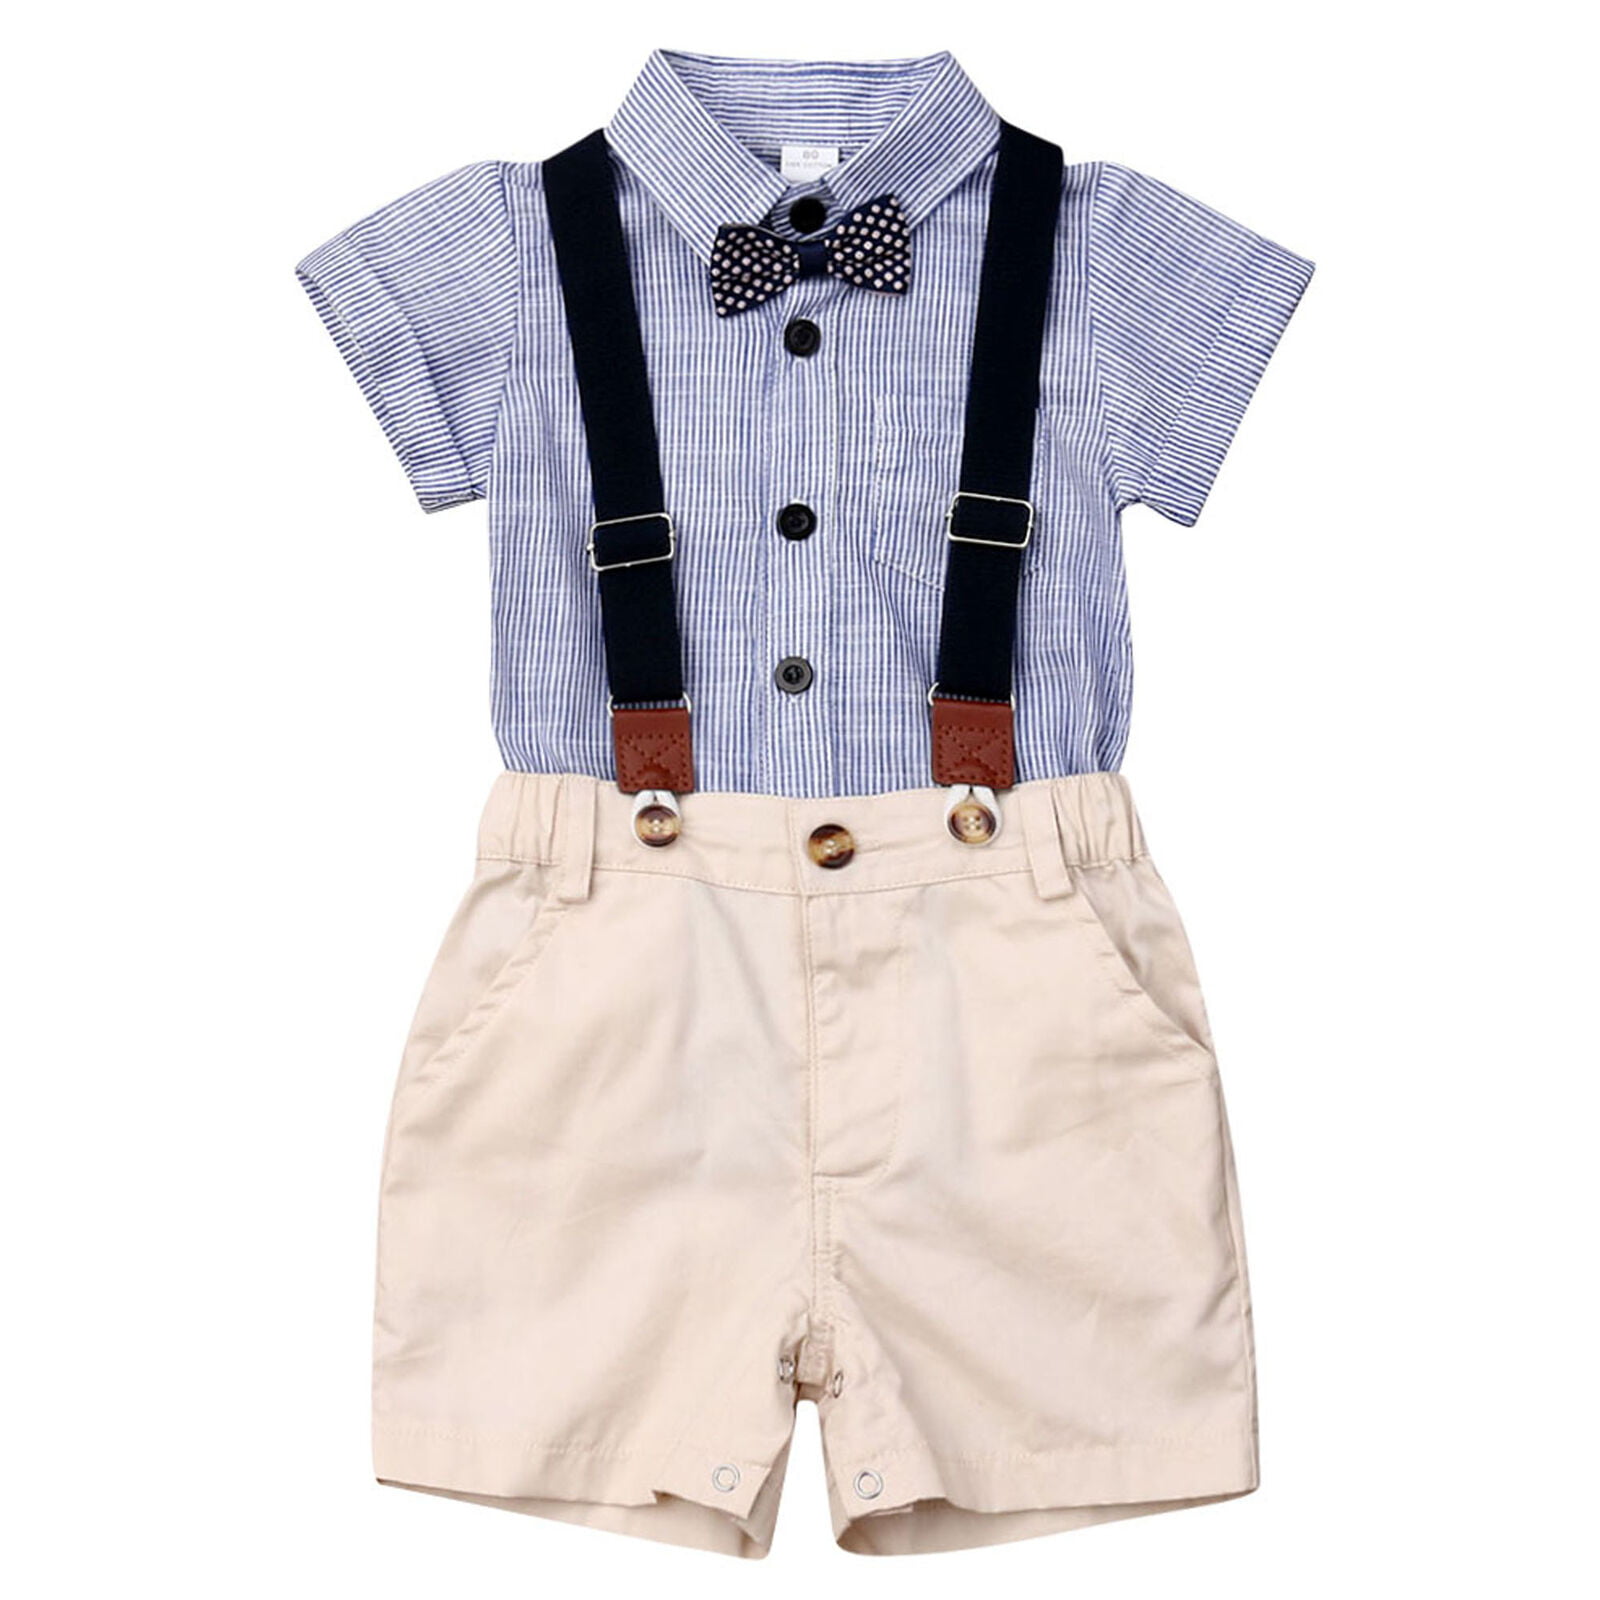 Details about   Dapper Dude Baby Boys' Suspenders 2-Piece Shorts Set Outfit 